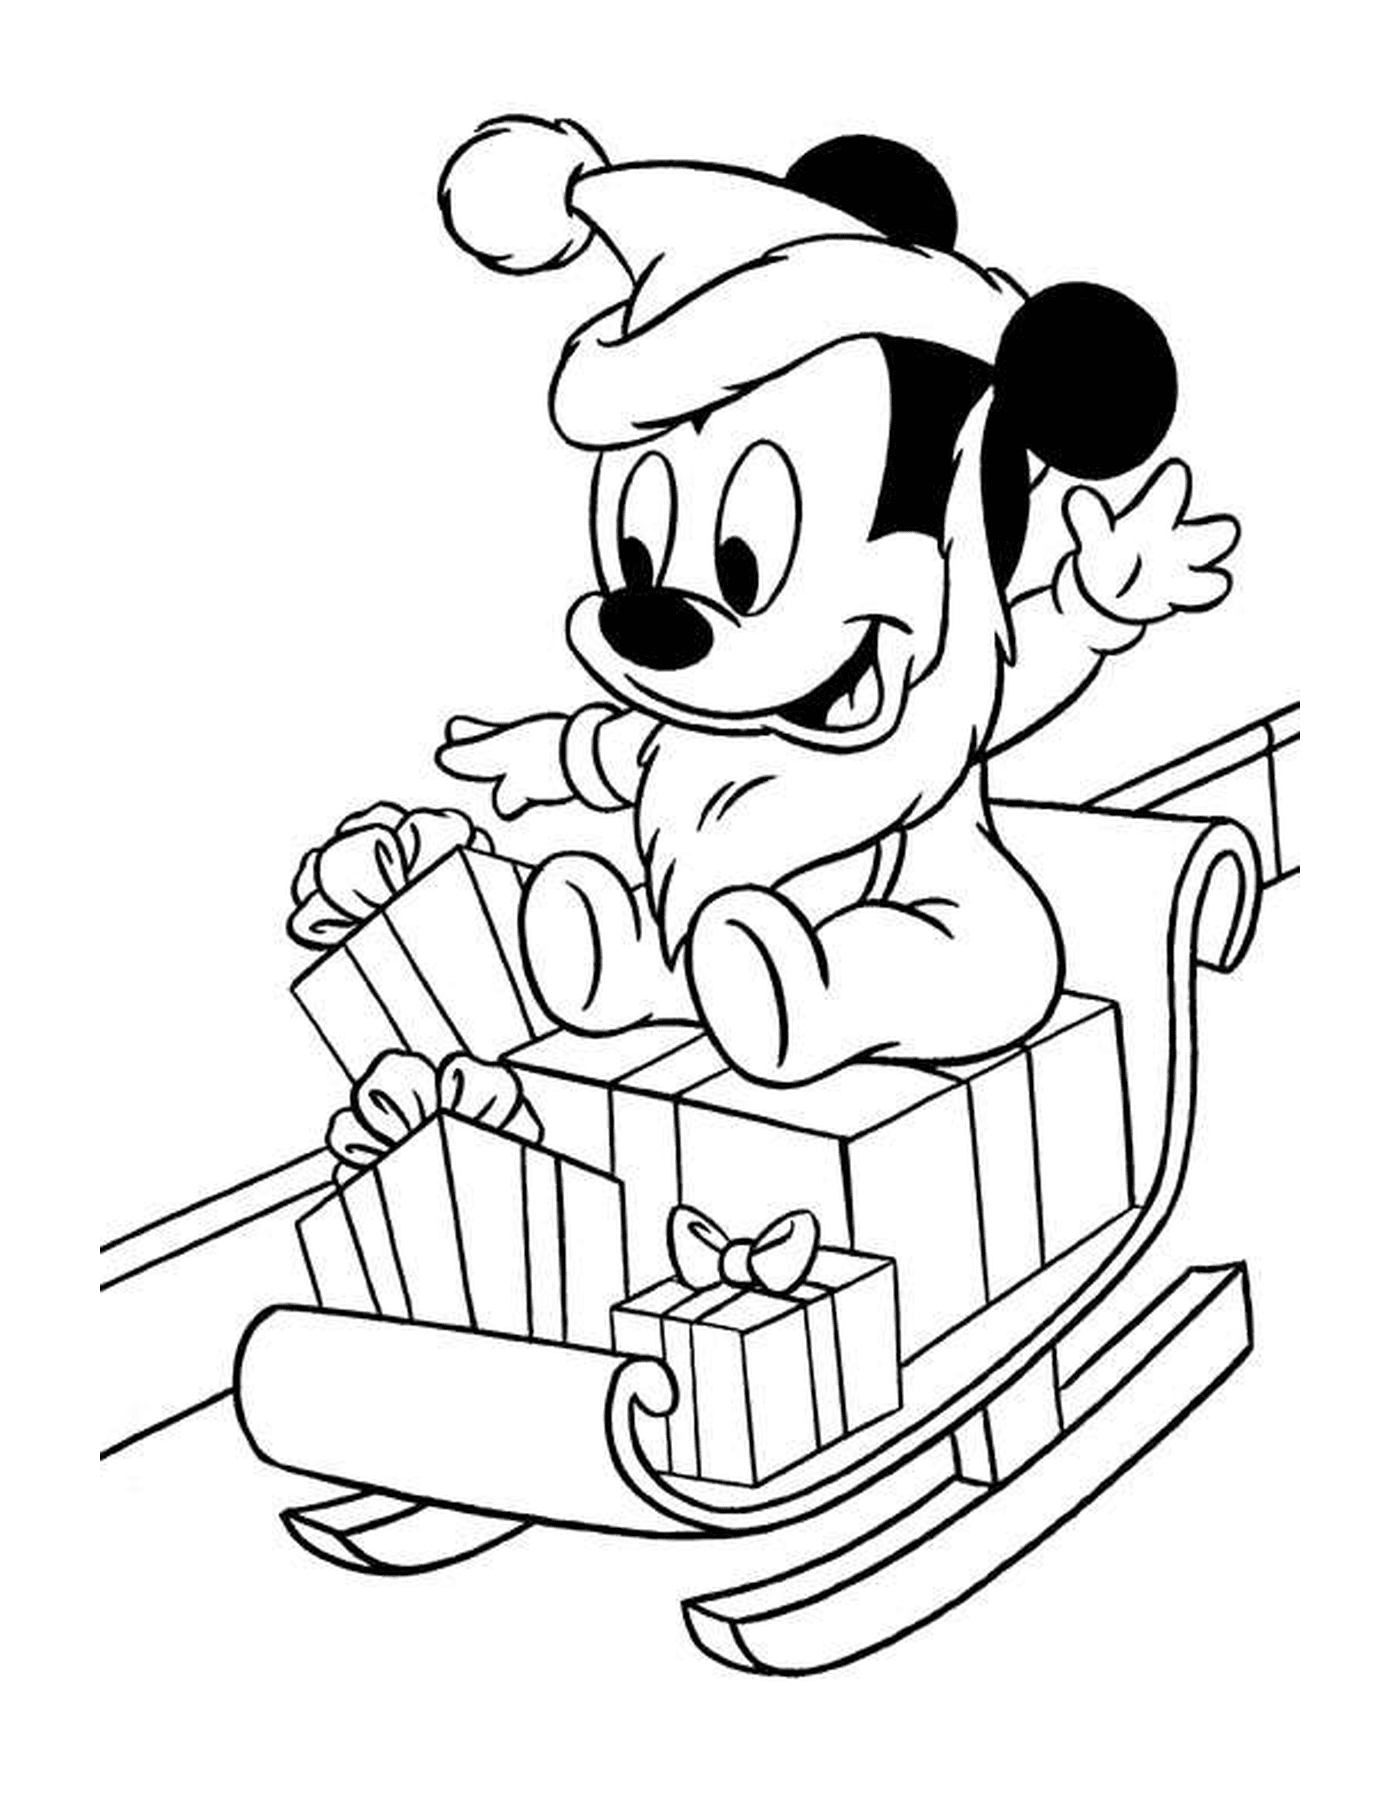  Mickey sentado no trenó 